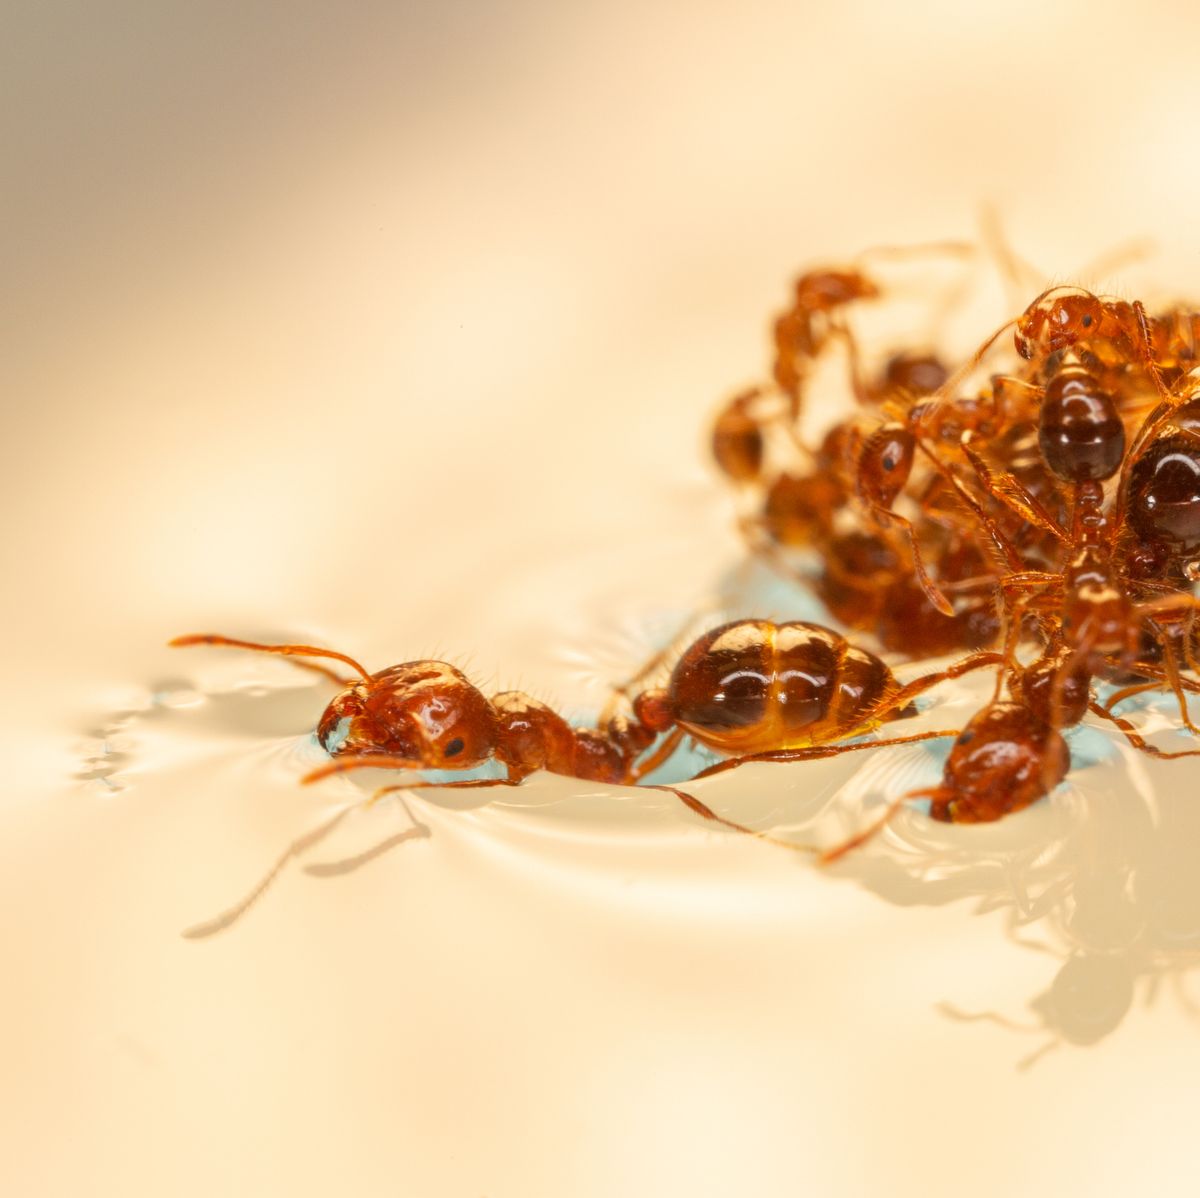 Ants Reel Servicing